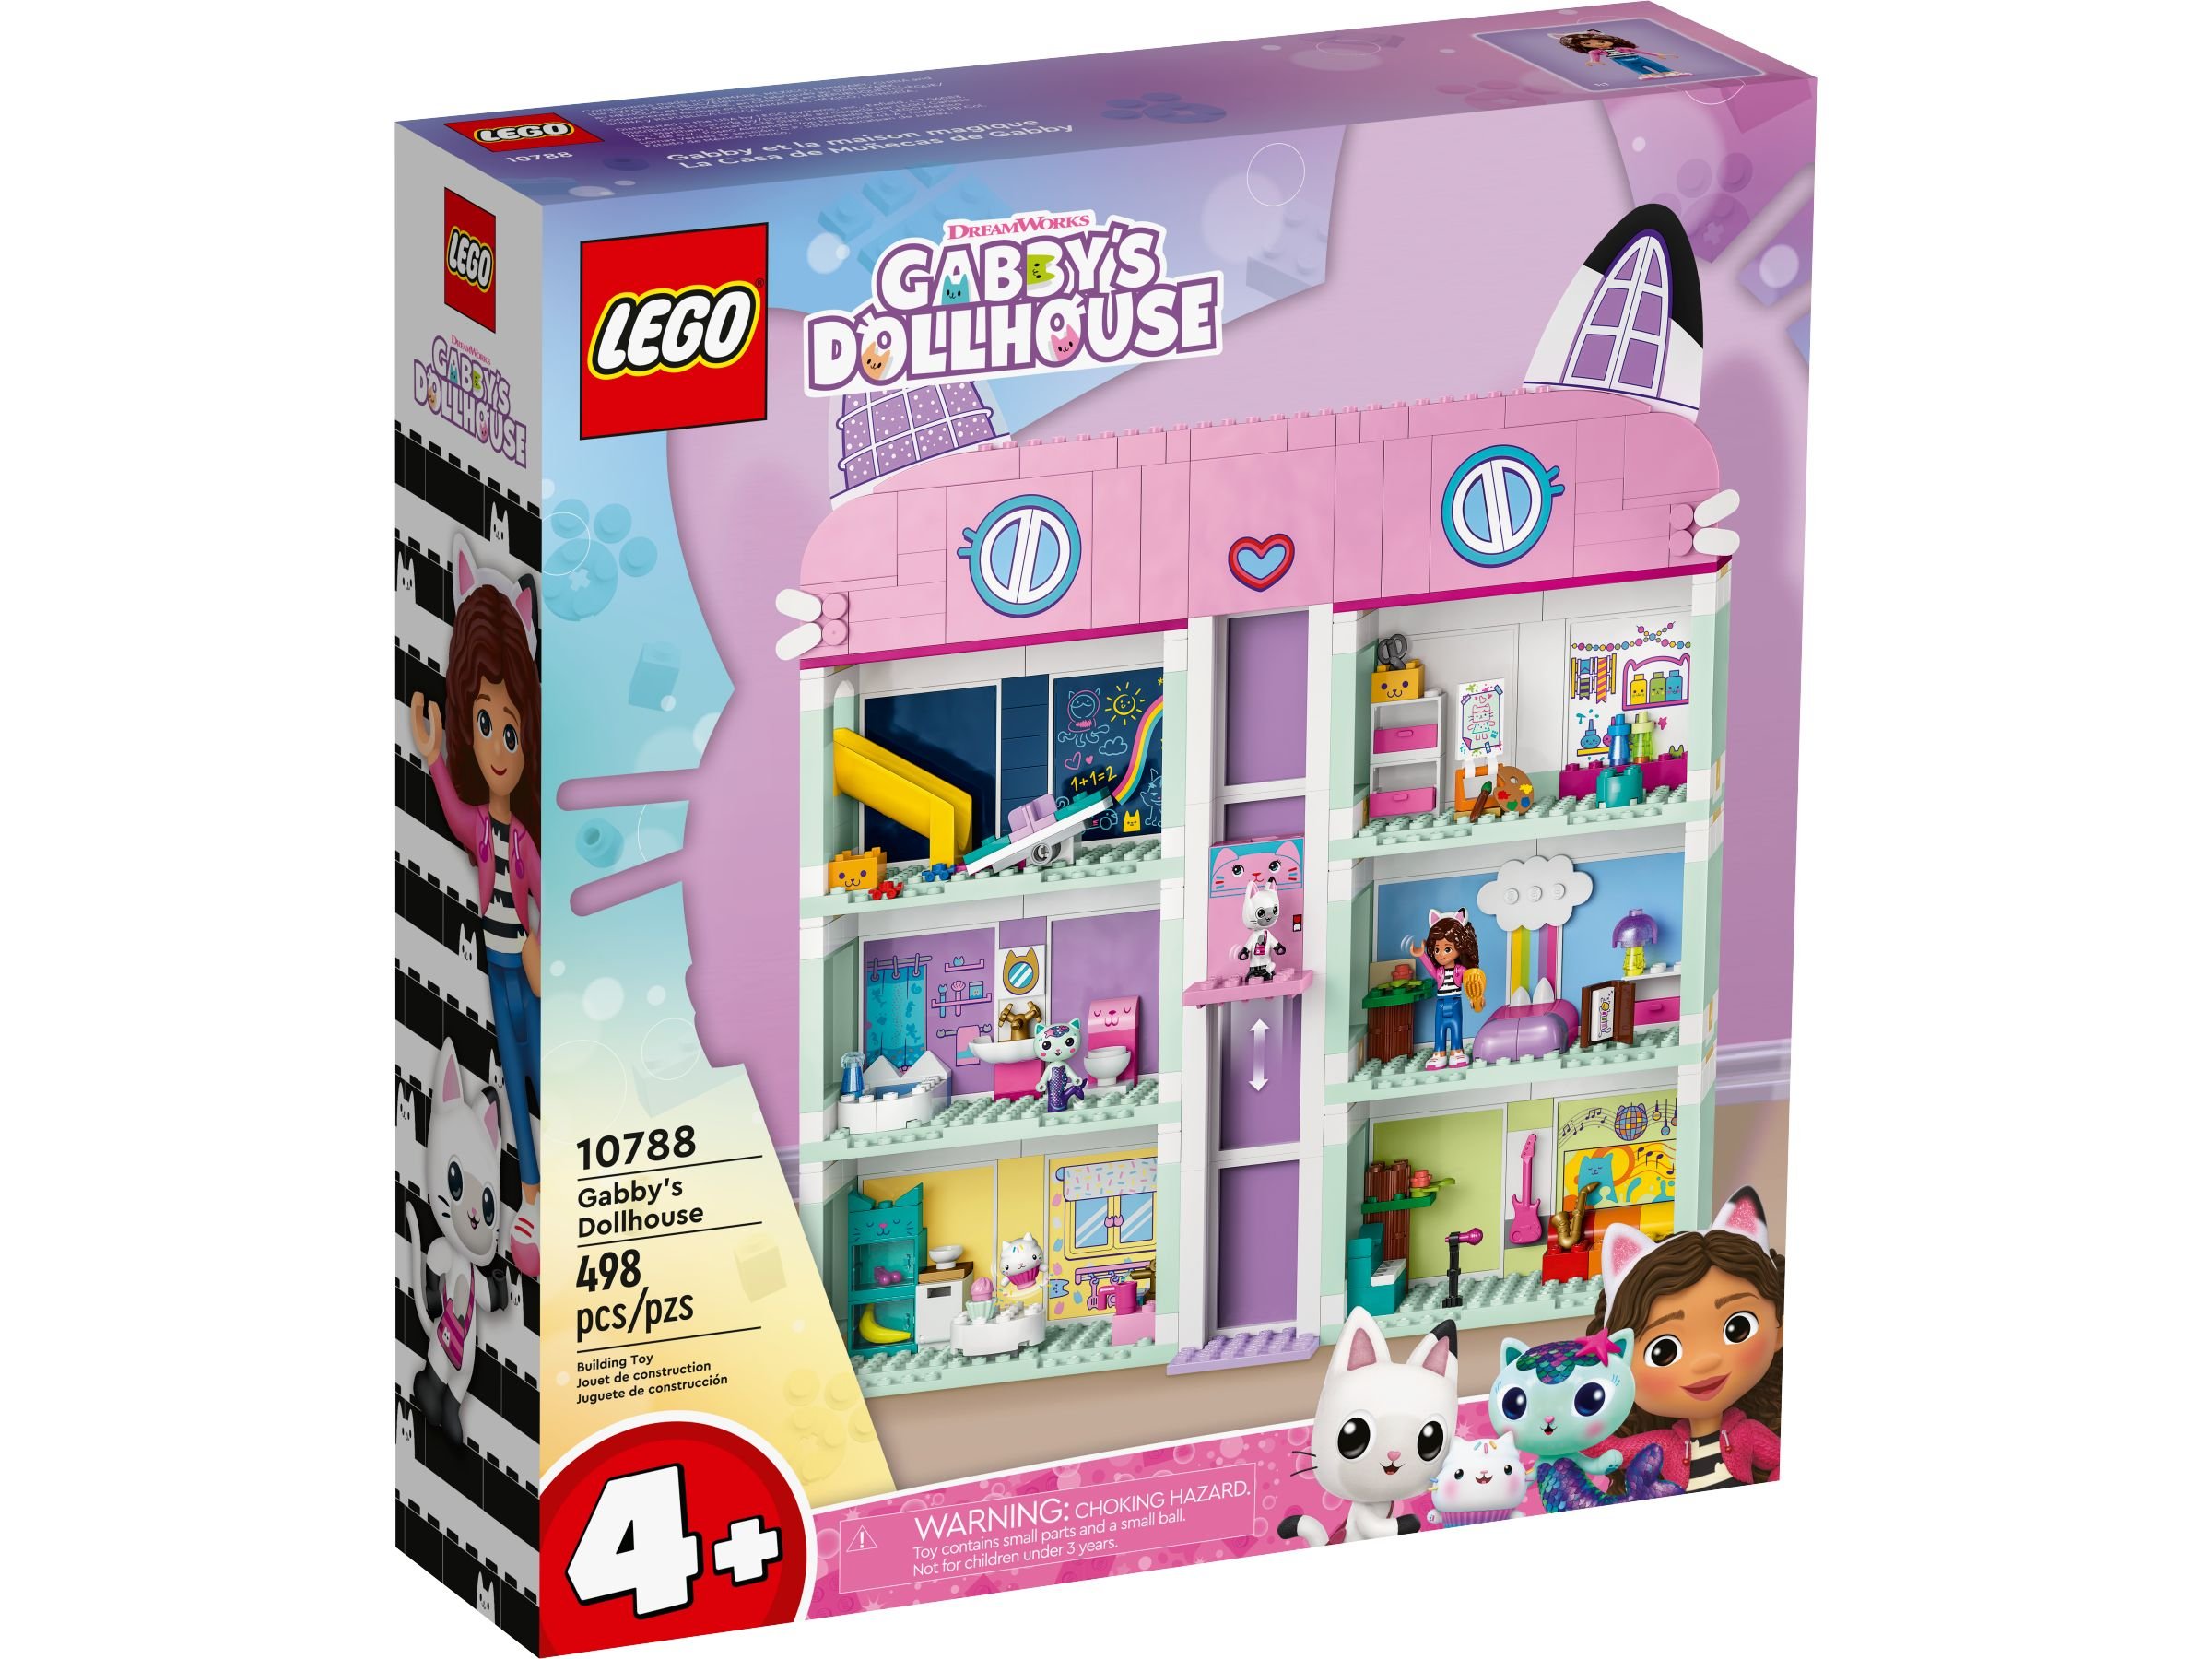 LEGO DreamWorks 10788 Gabbys Puppenhaus LEGO_10788_Box1_v39.jpg